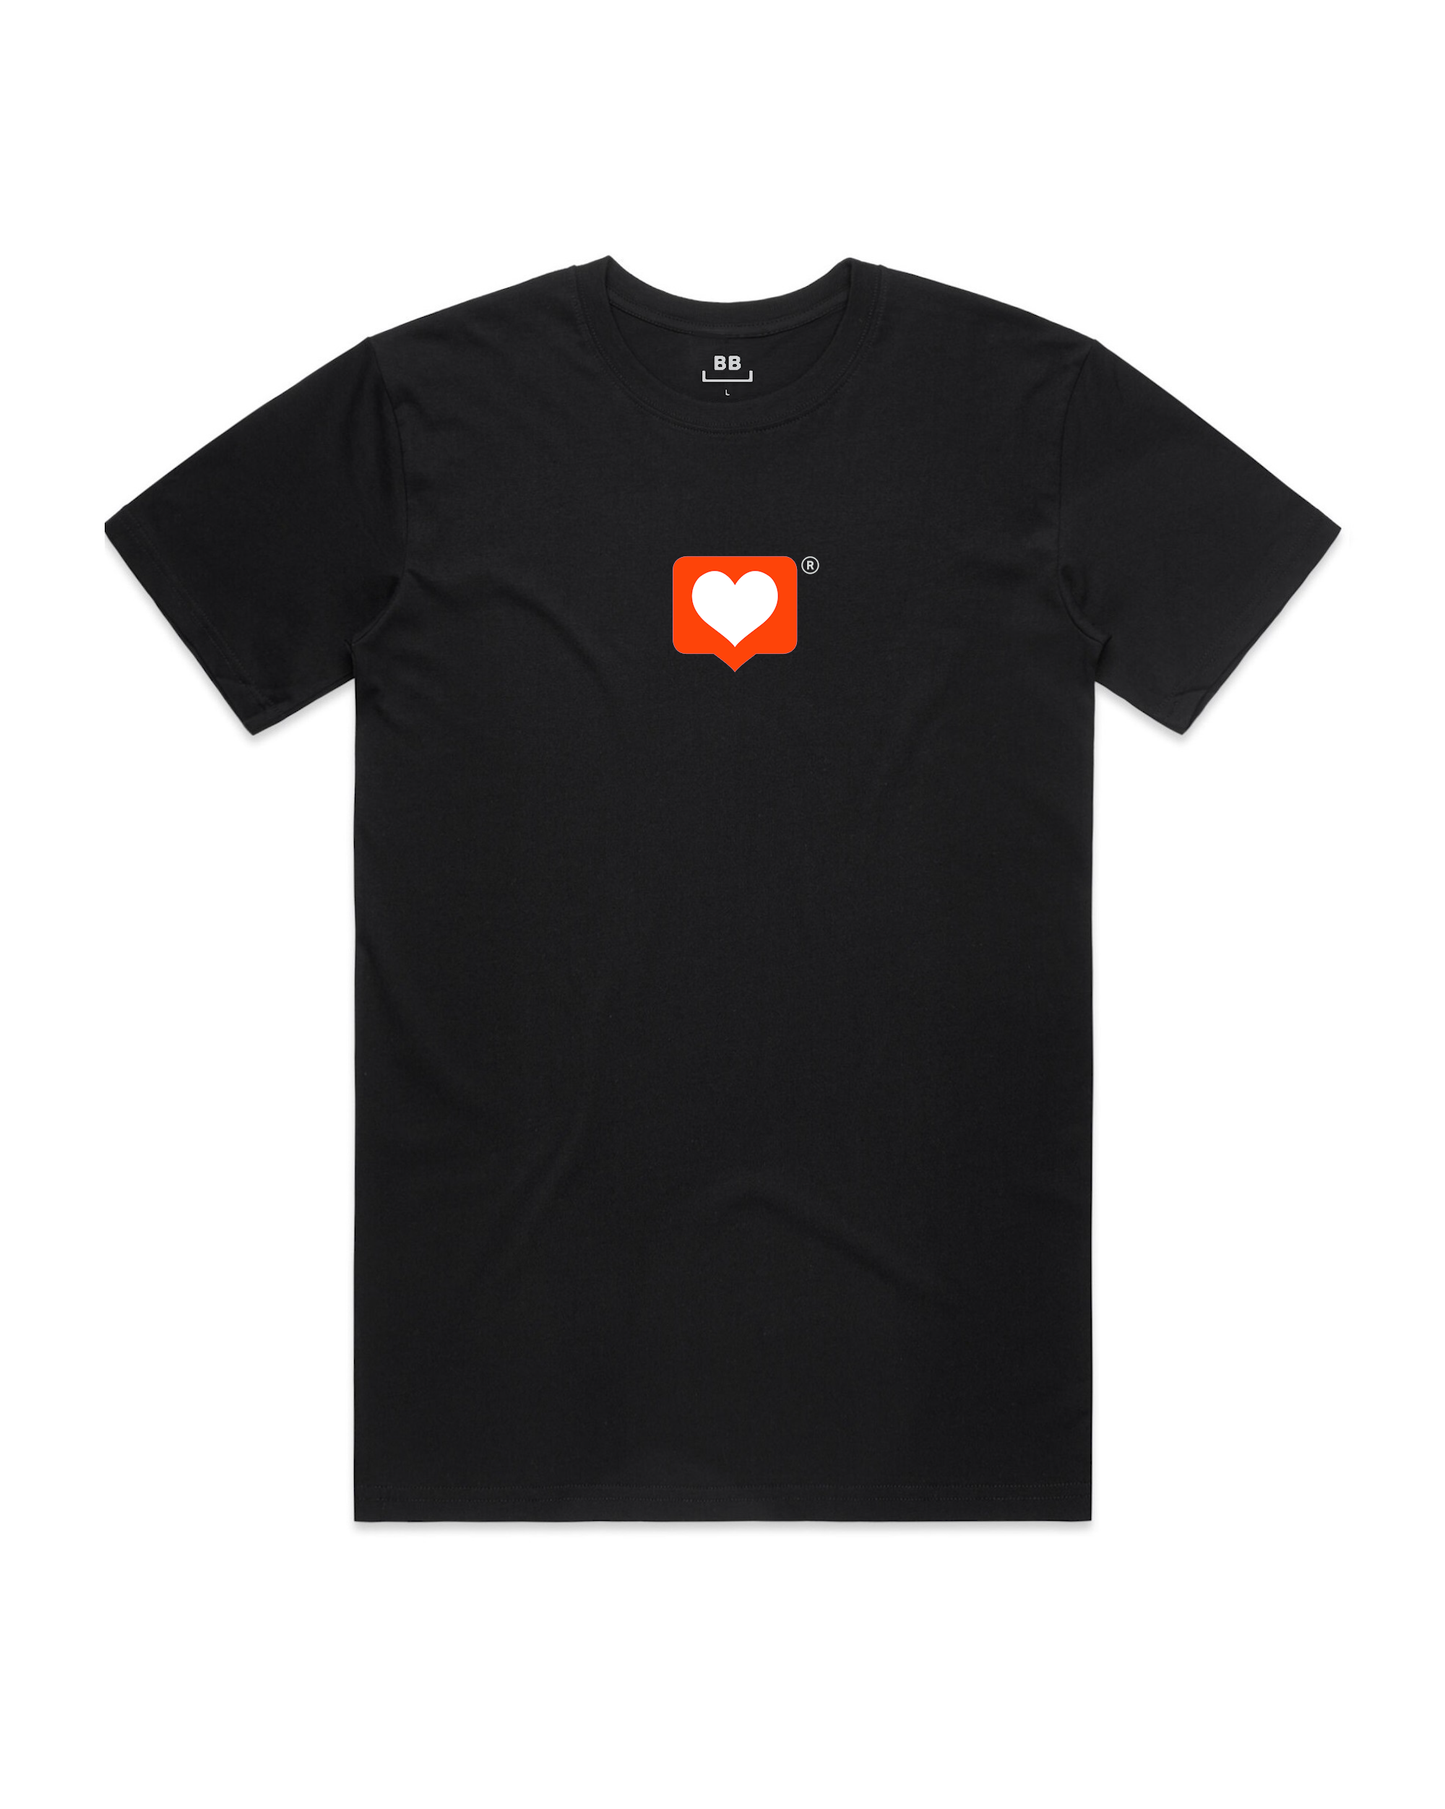 Love Clothing Co. ‘Heart’ Tee